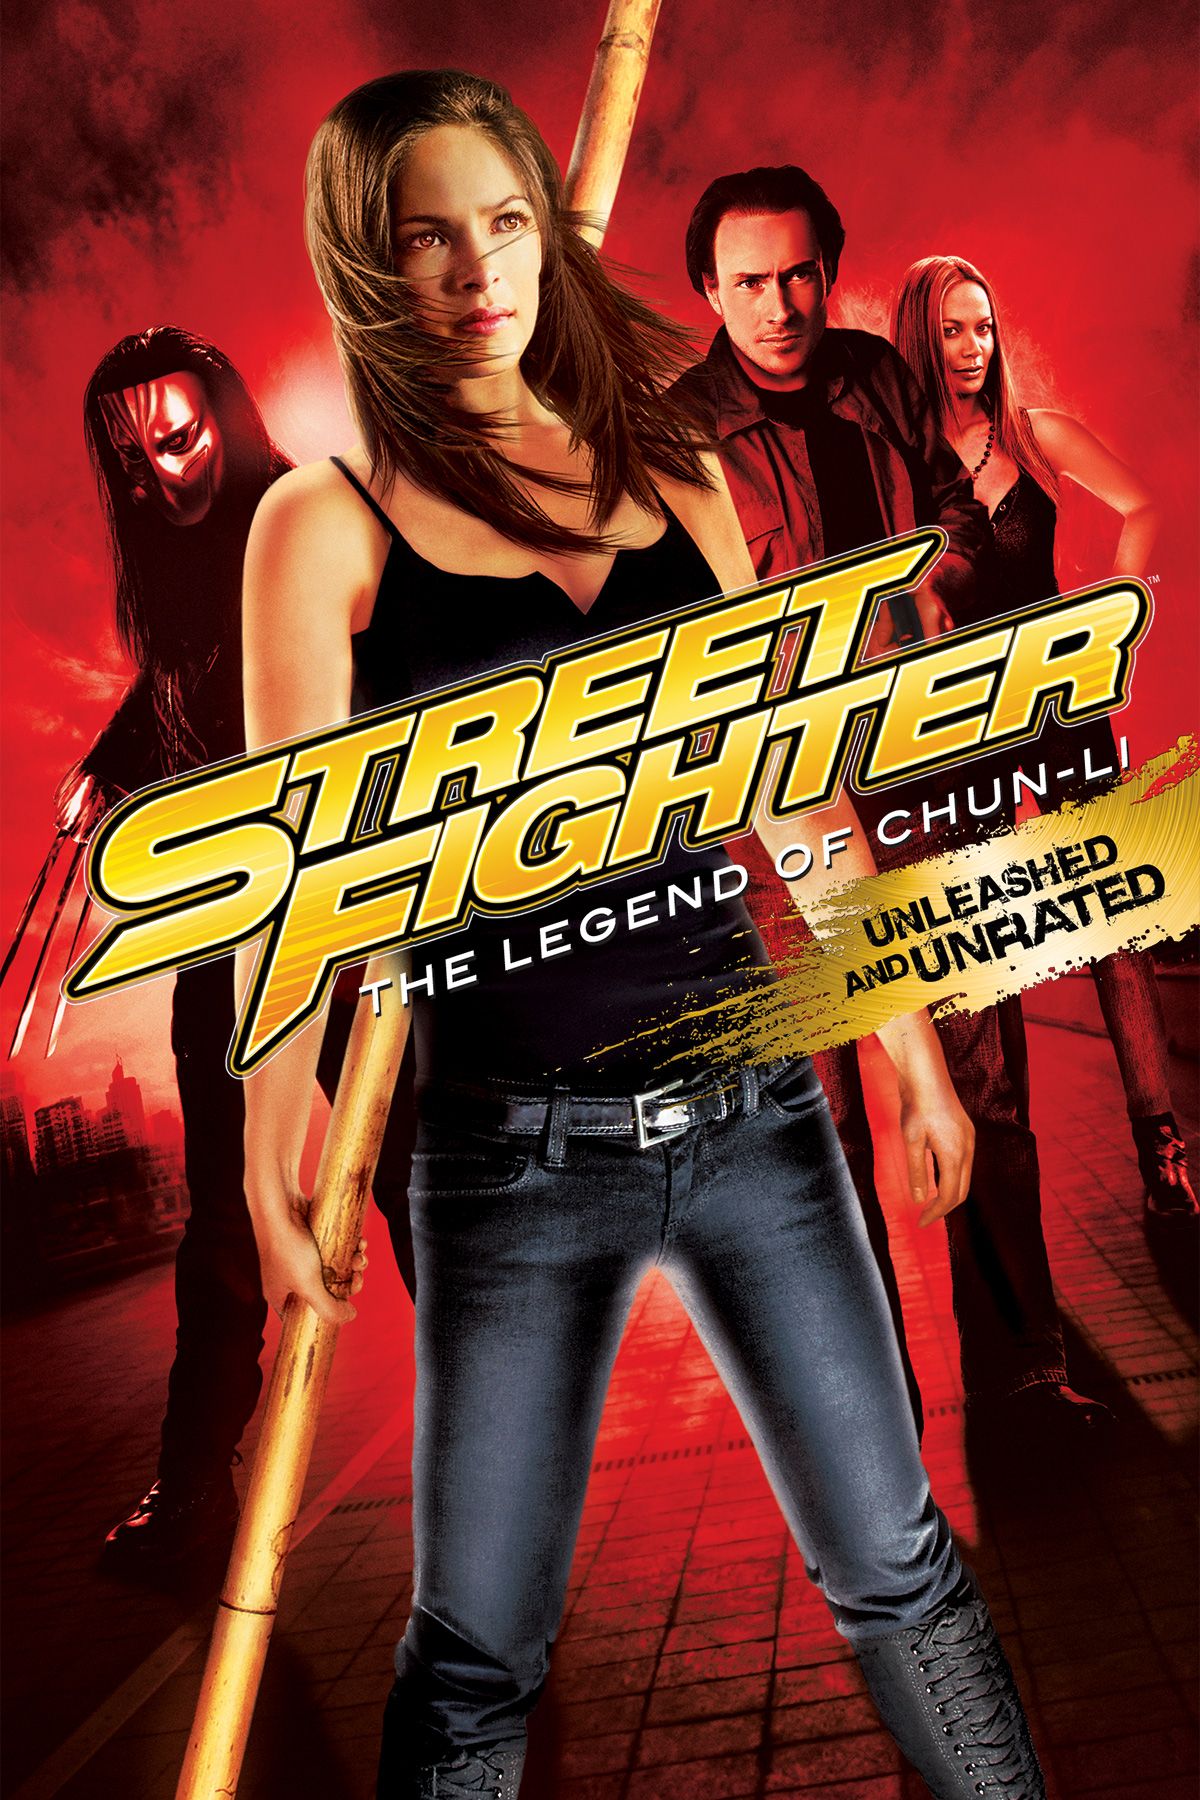 Street Fighter, Full Movie